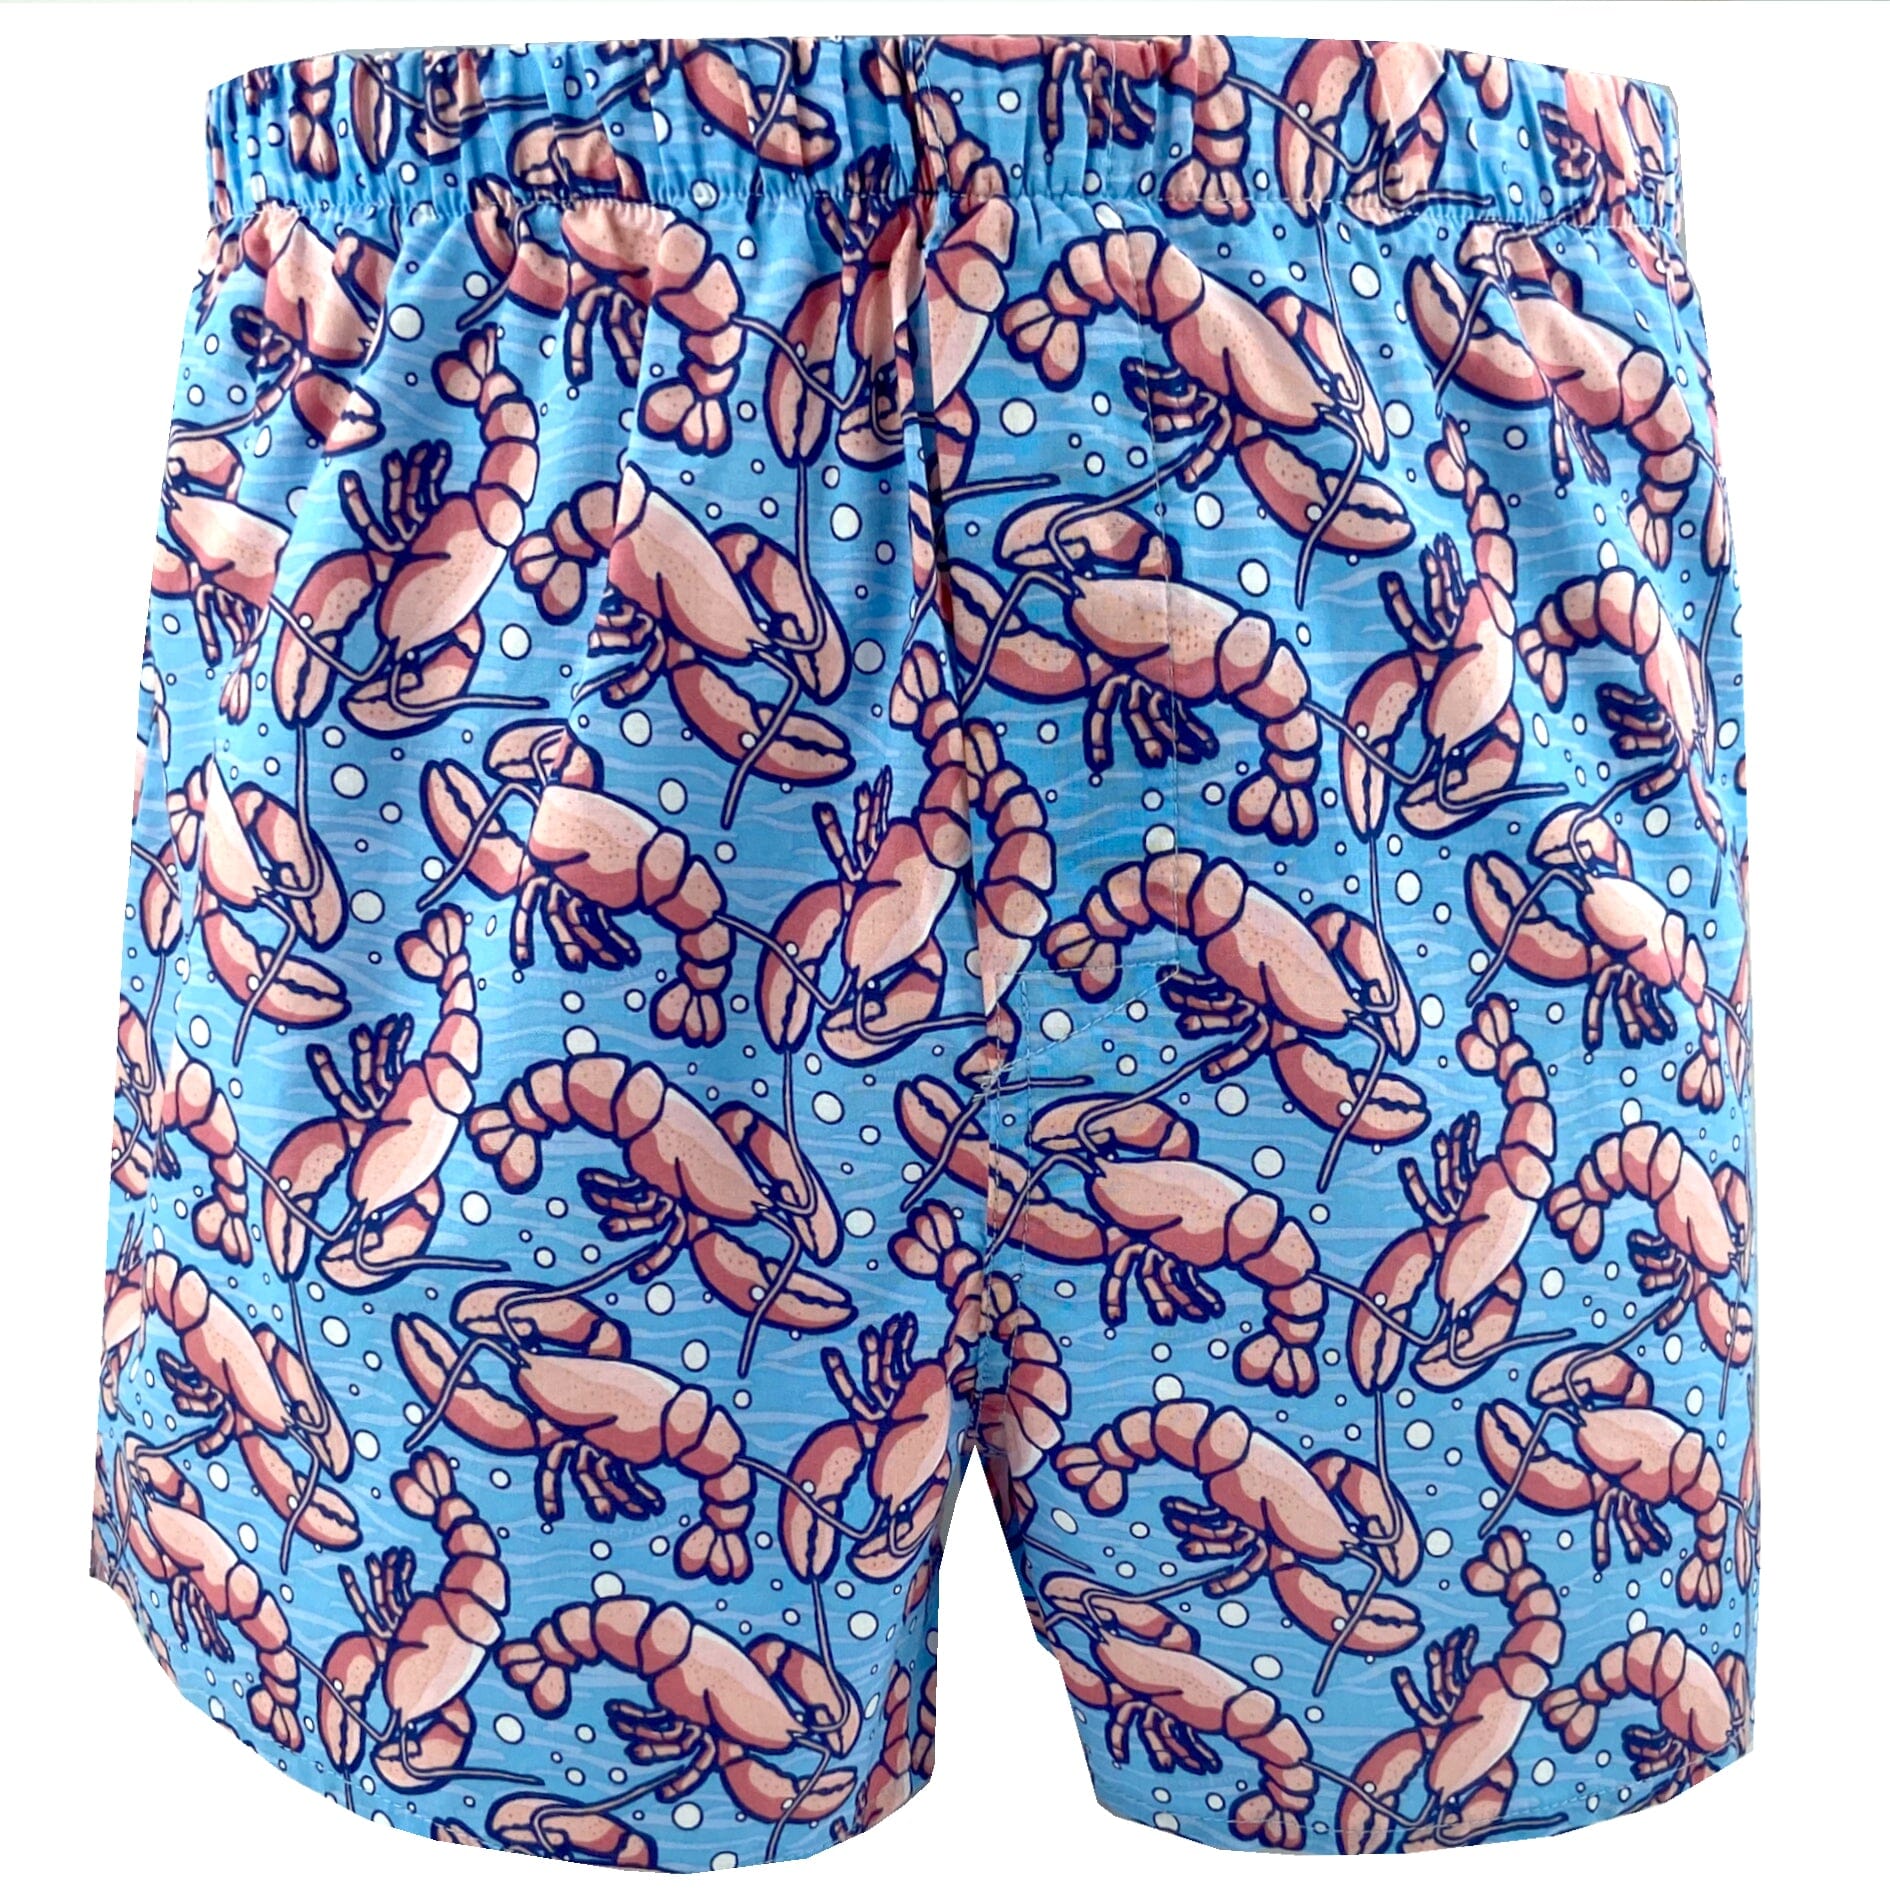 Lobster Boxers For Men. Buy Men's Crayfish Boxer Shorts Here